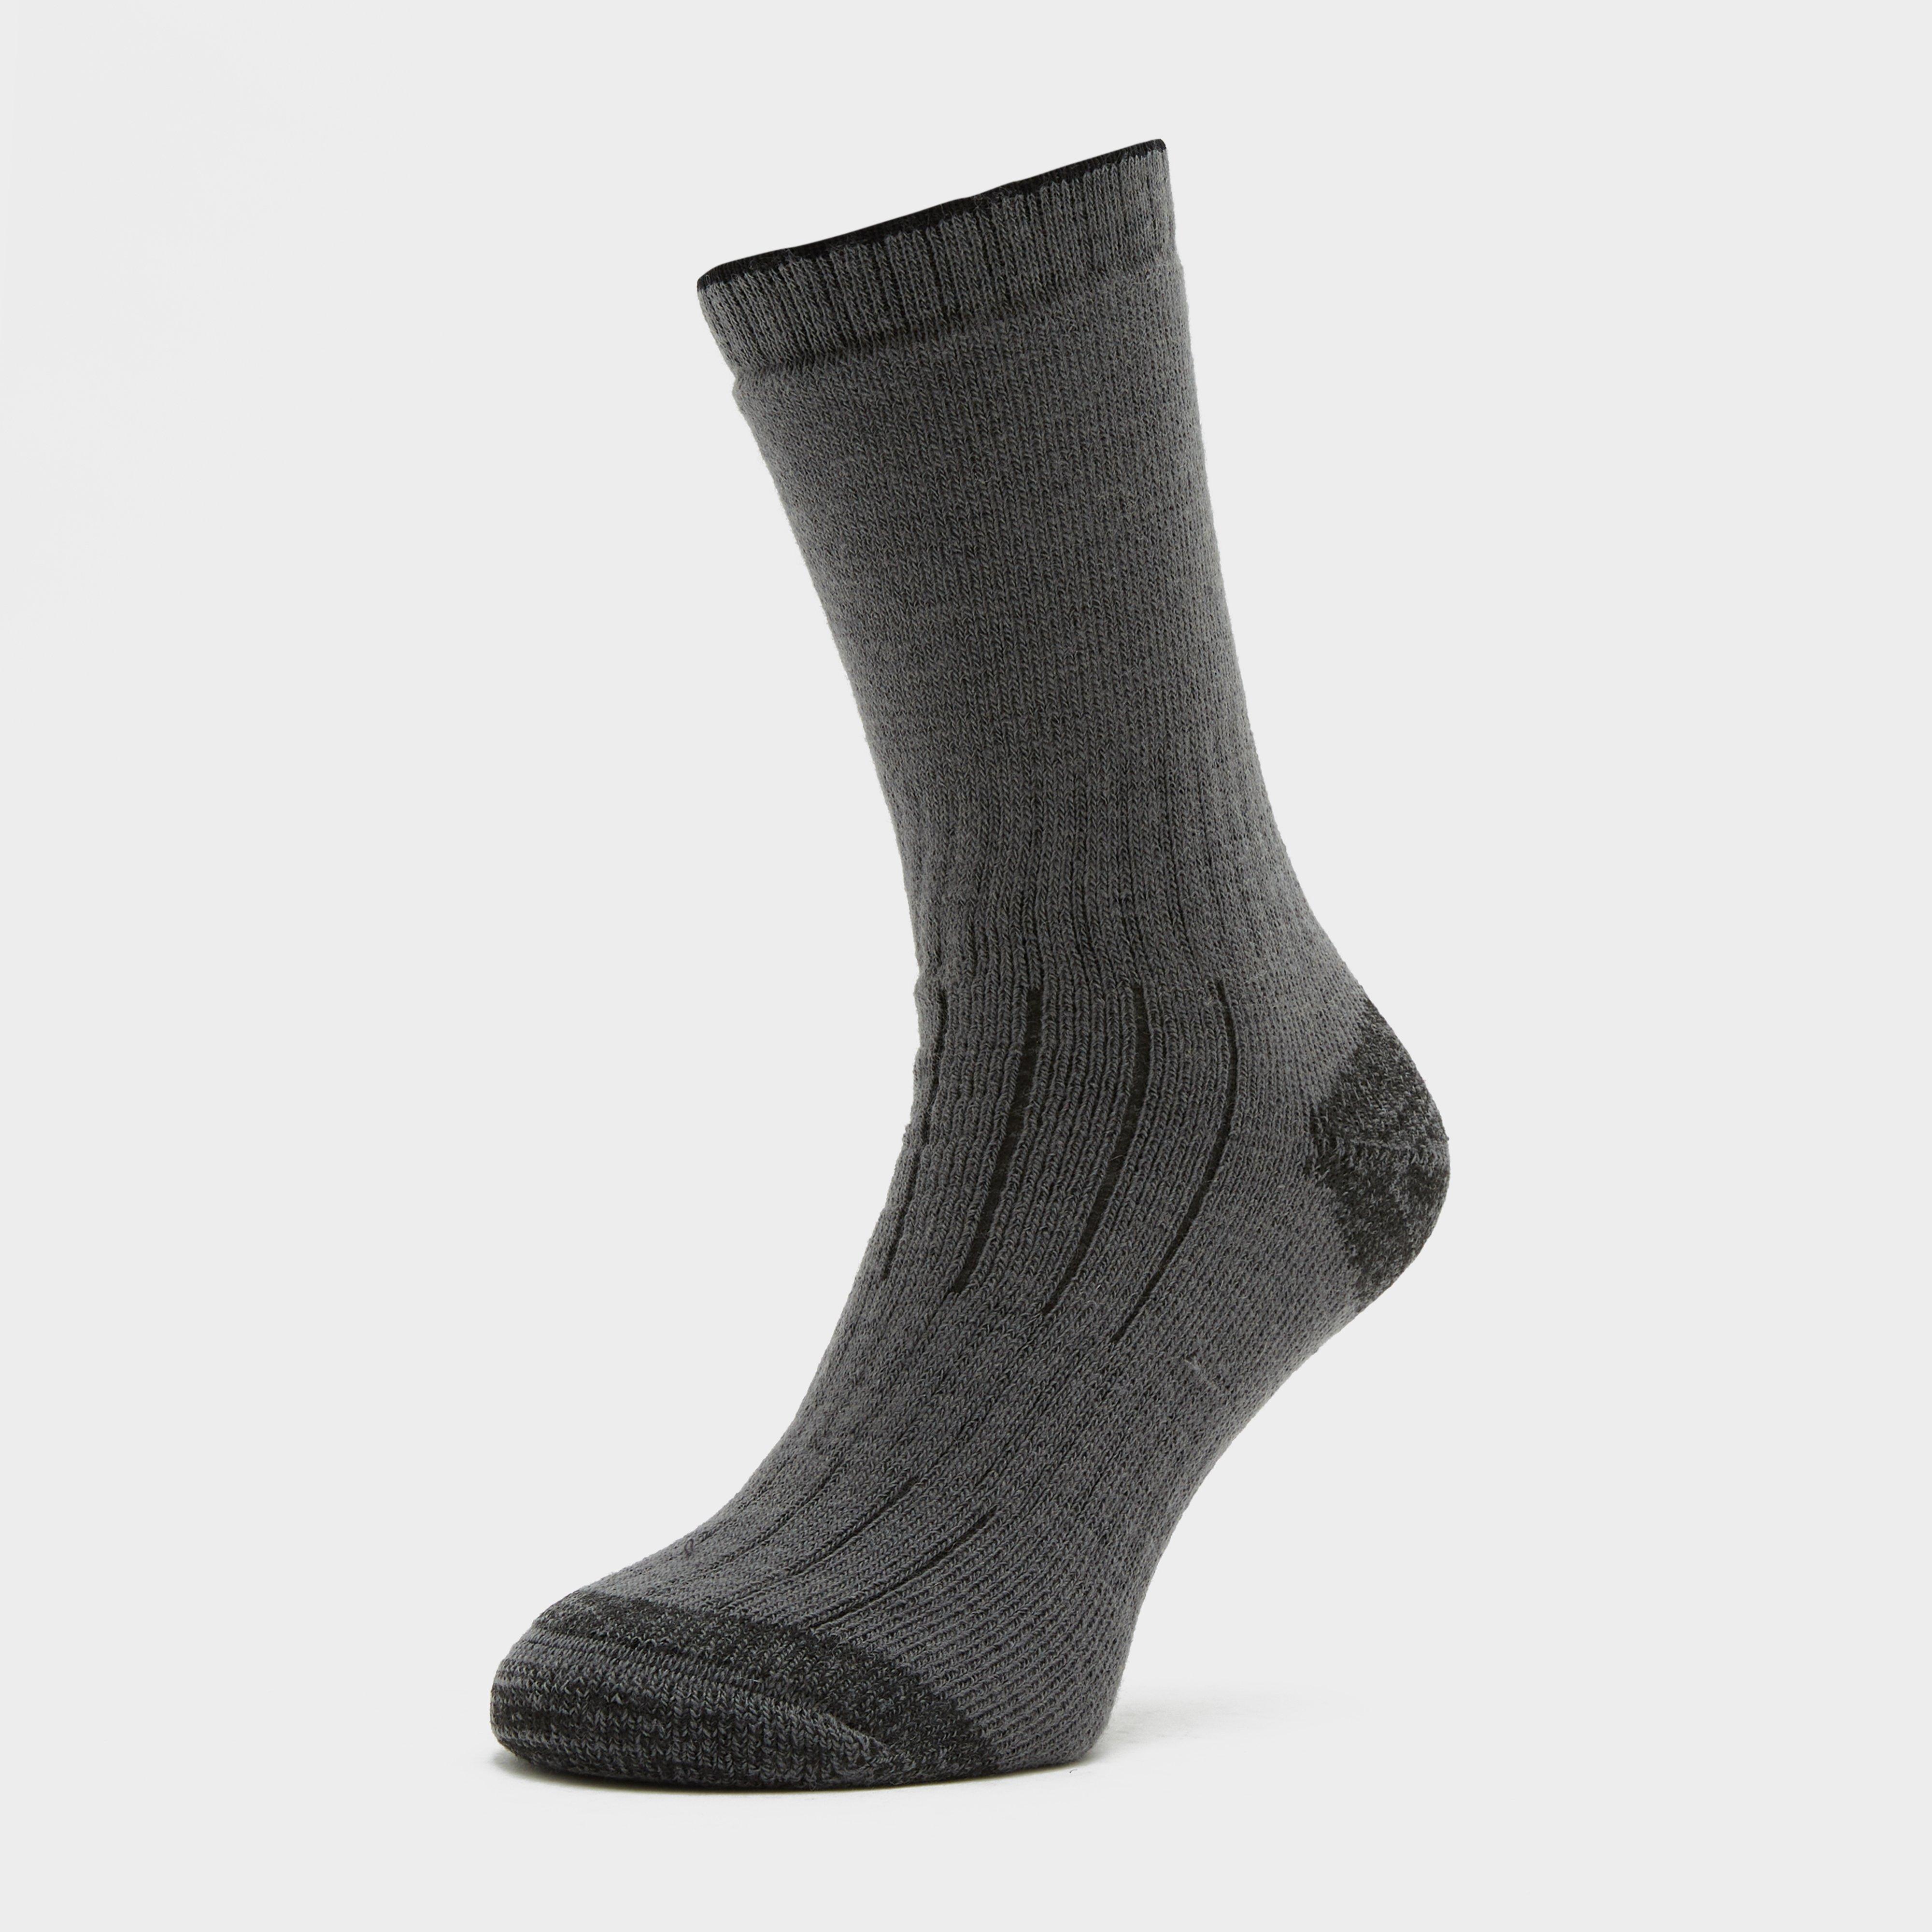 Peter Storm Mens Merino Explorer Socks - Grey/grey  Grey/grey